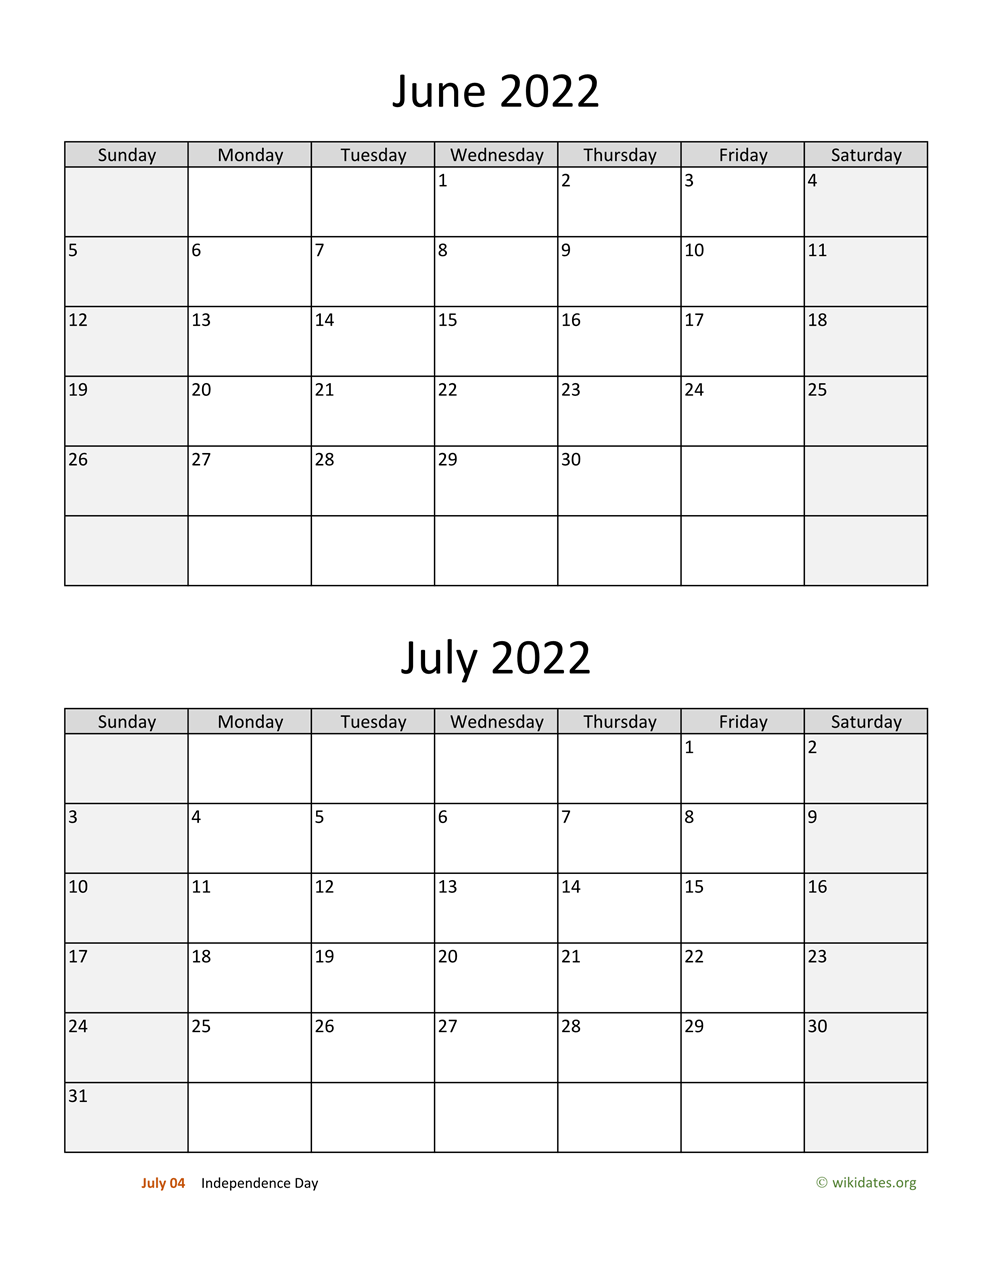 June July Calendar 2022 June And July 2022 Calendar | Wikidates.org